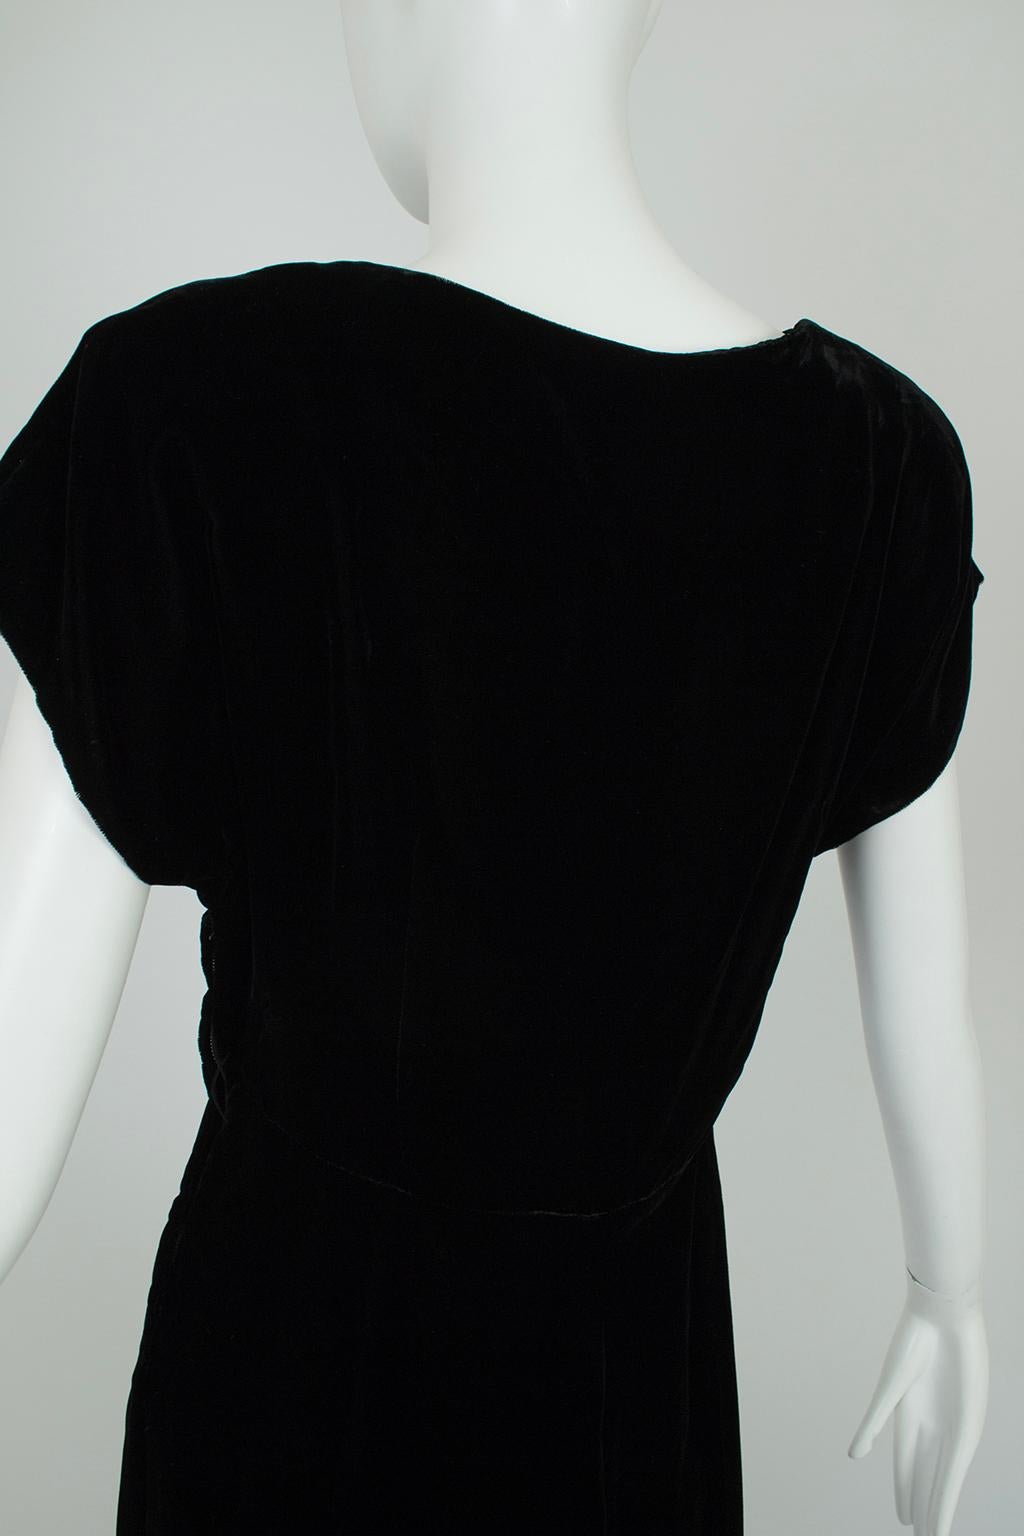 Pre-War Black Velvet Art Deco Bead and Rhinestone Cocktail Dress – L, 1940s For Sale 3